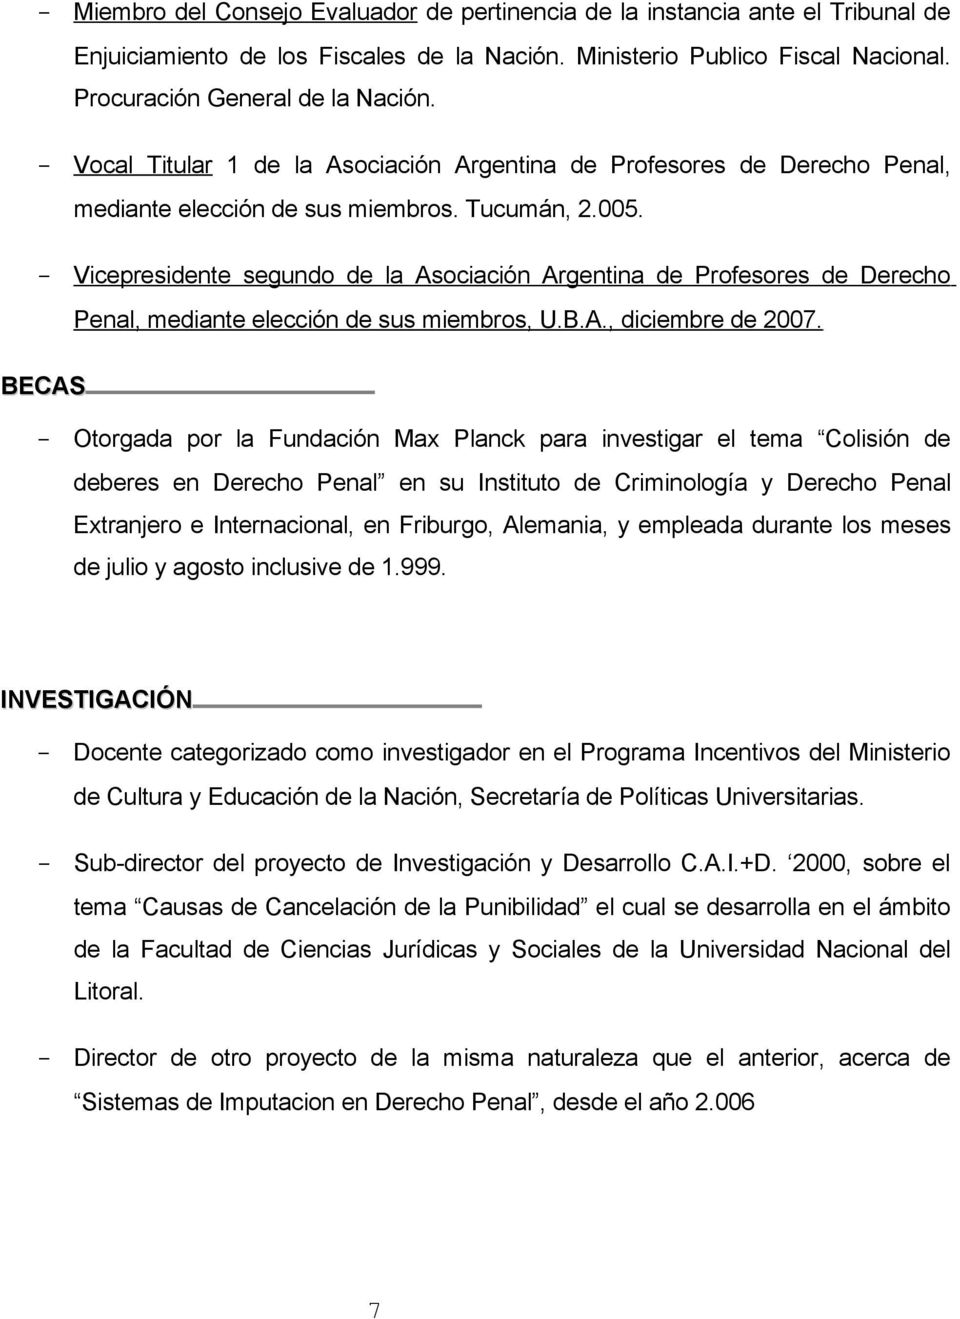 - Vicepresidente segundo de la Asociación Argentina de Profesores de Derecho BECAS Penal, mediante elección de sus miembros, U.B.A., diciembre de 2007.